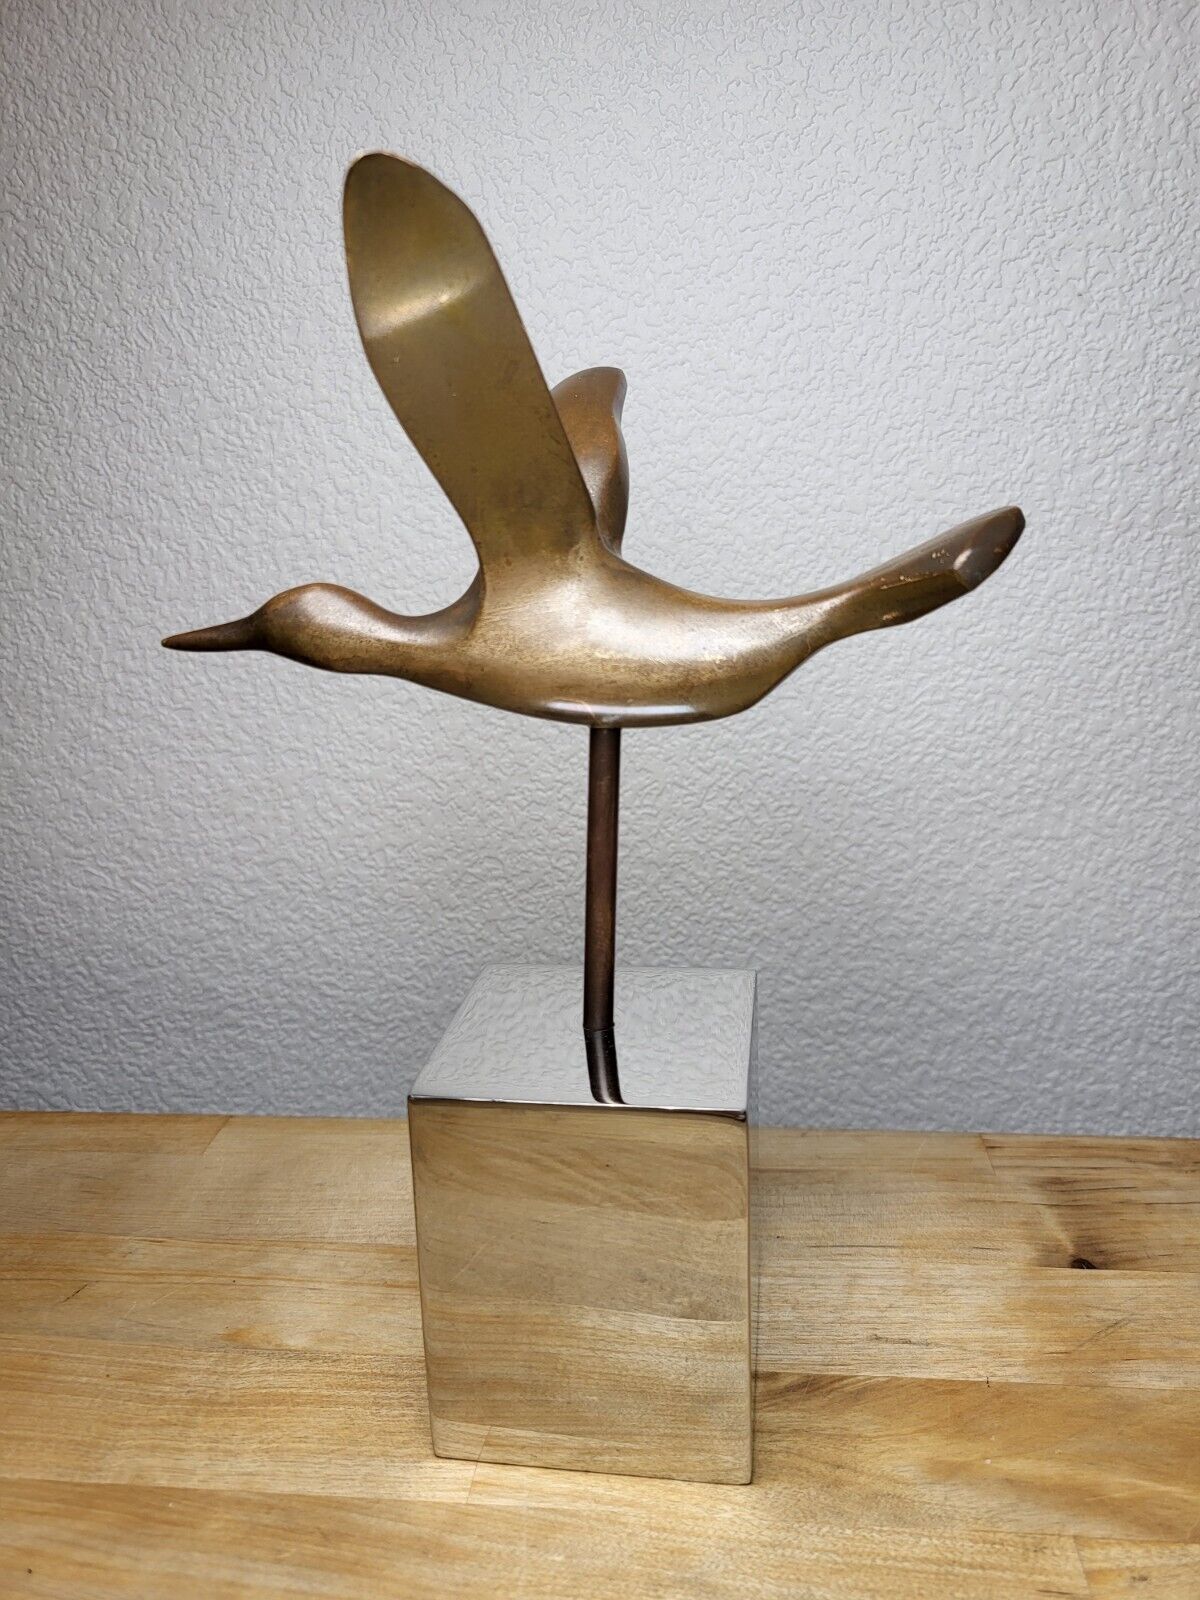 Vintage Bronze Bird Sculpture 9” - Original - Signed Yolanda Lins D\'Augsburg